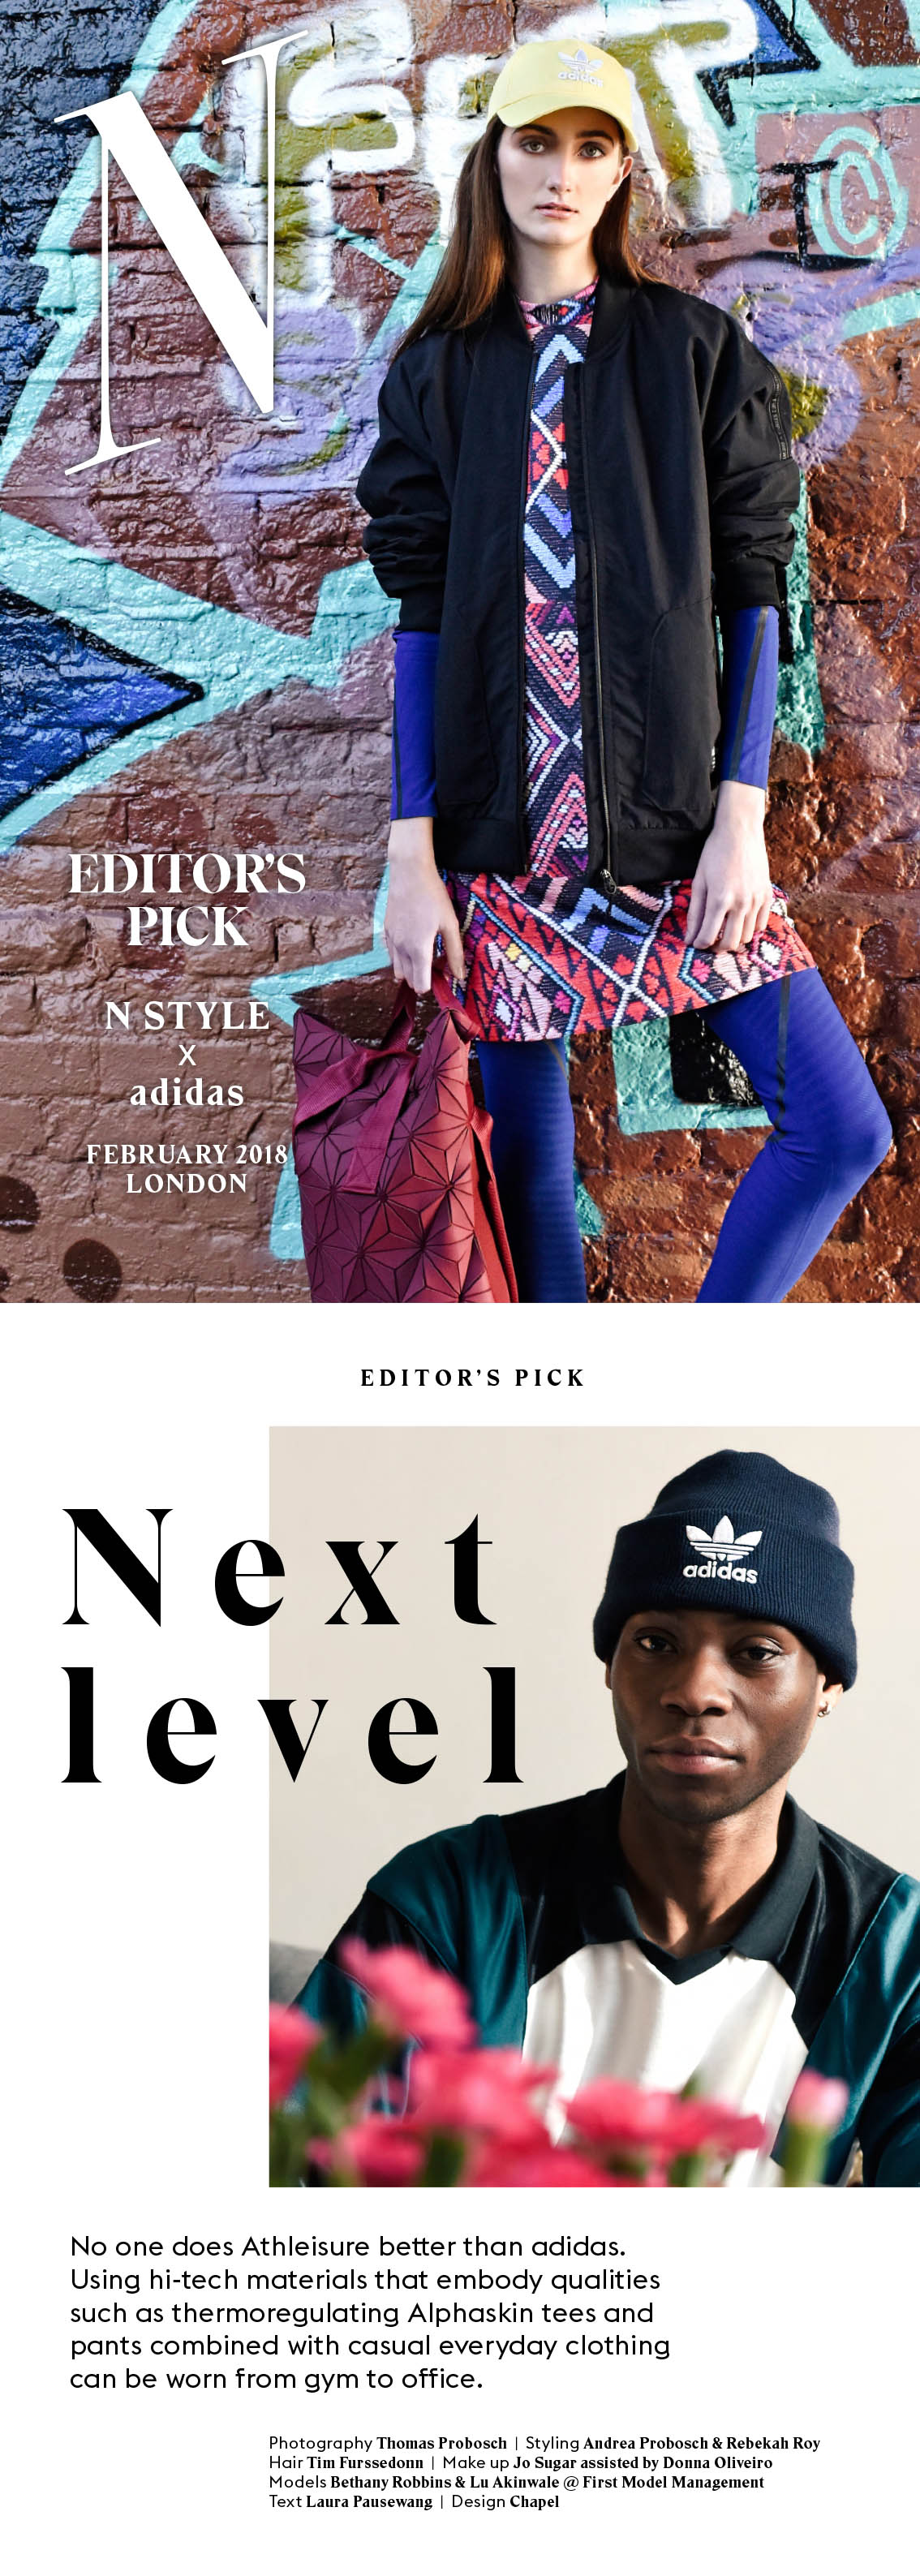 N Style x adidas Editor's Pick - Next level